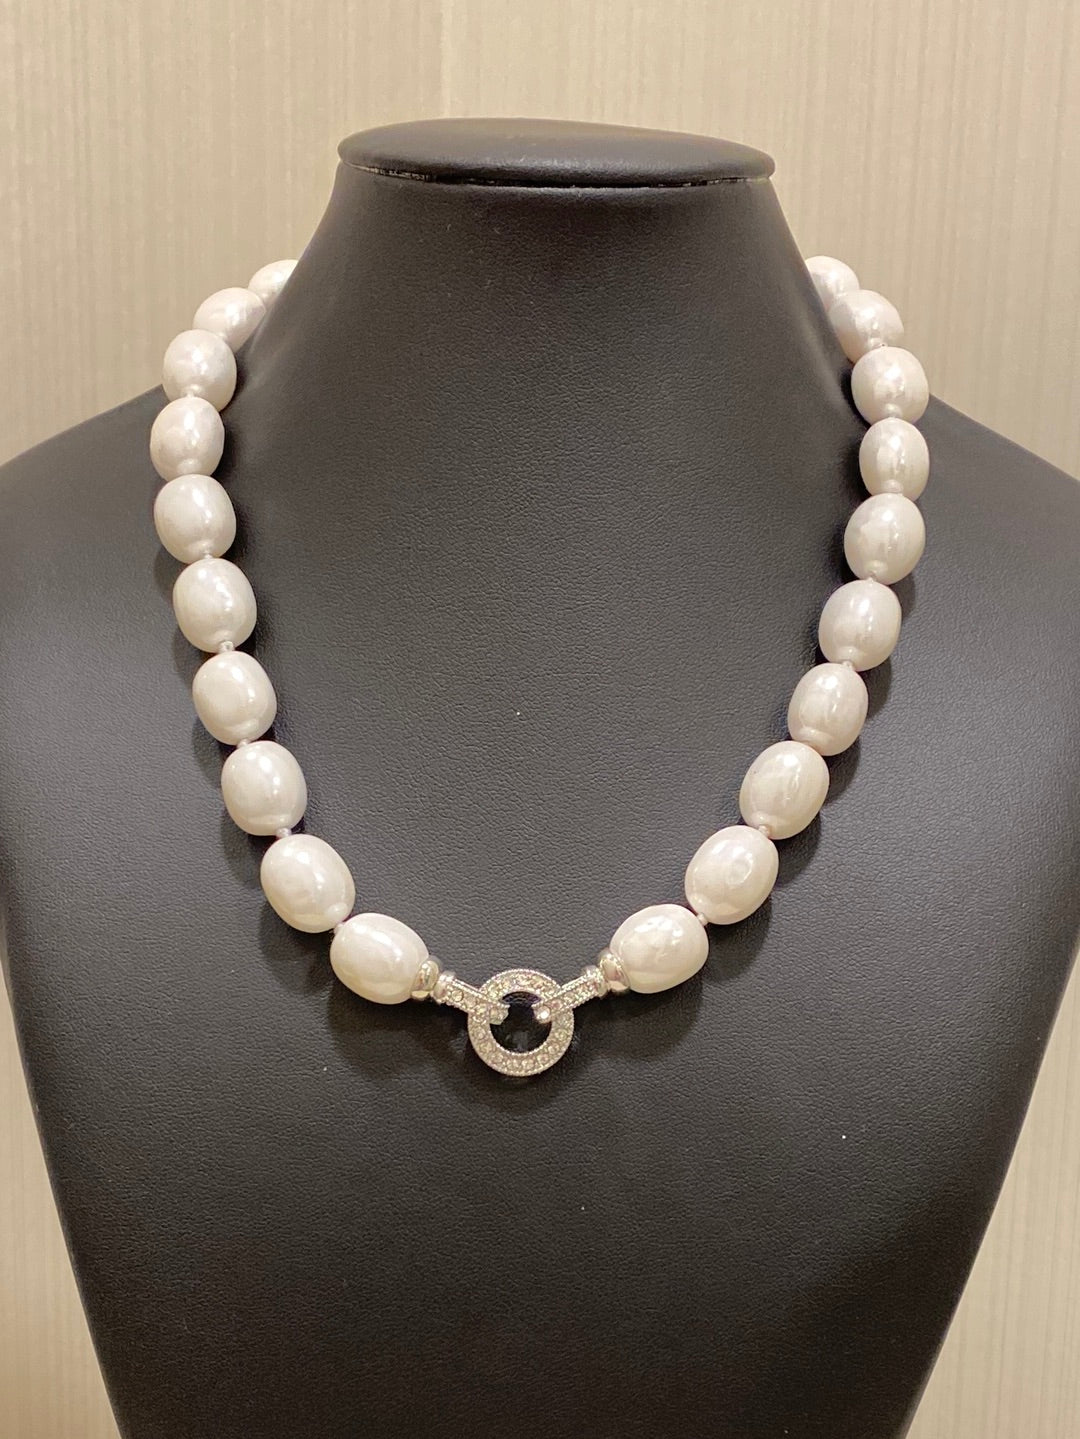 Silver & Pearl neck piece